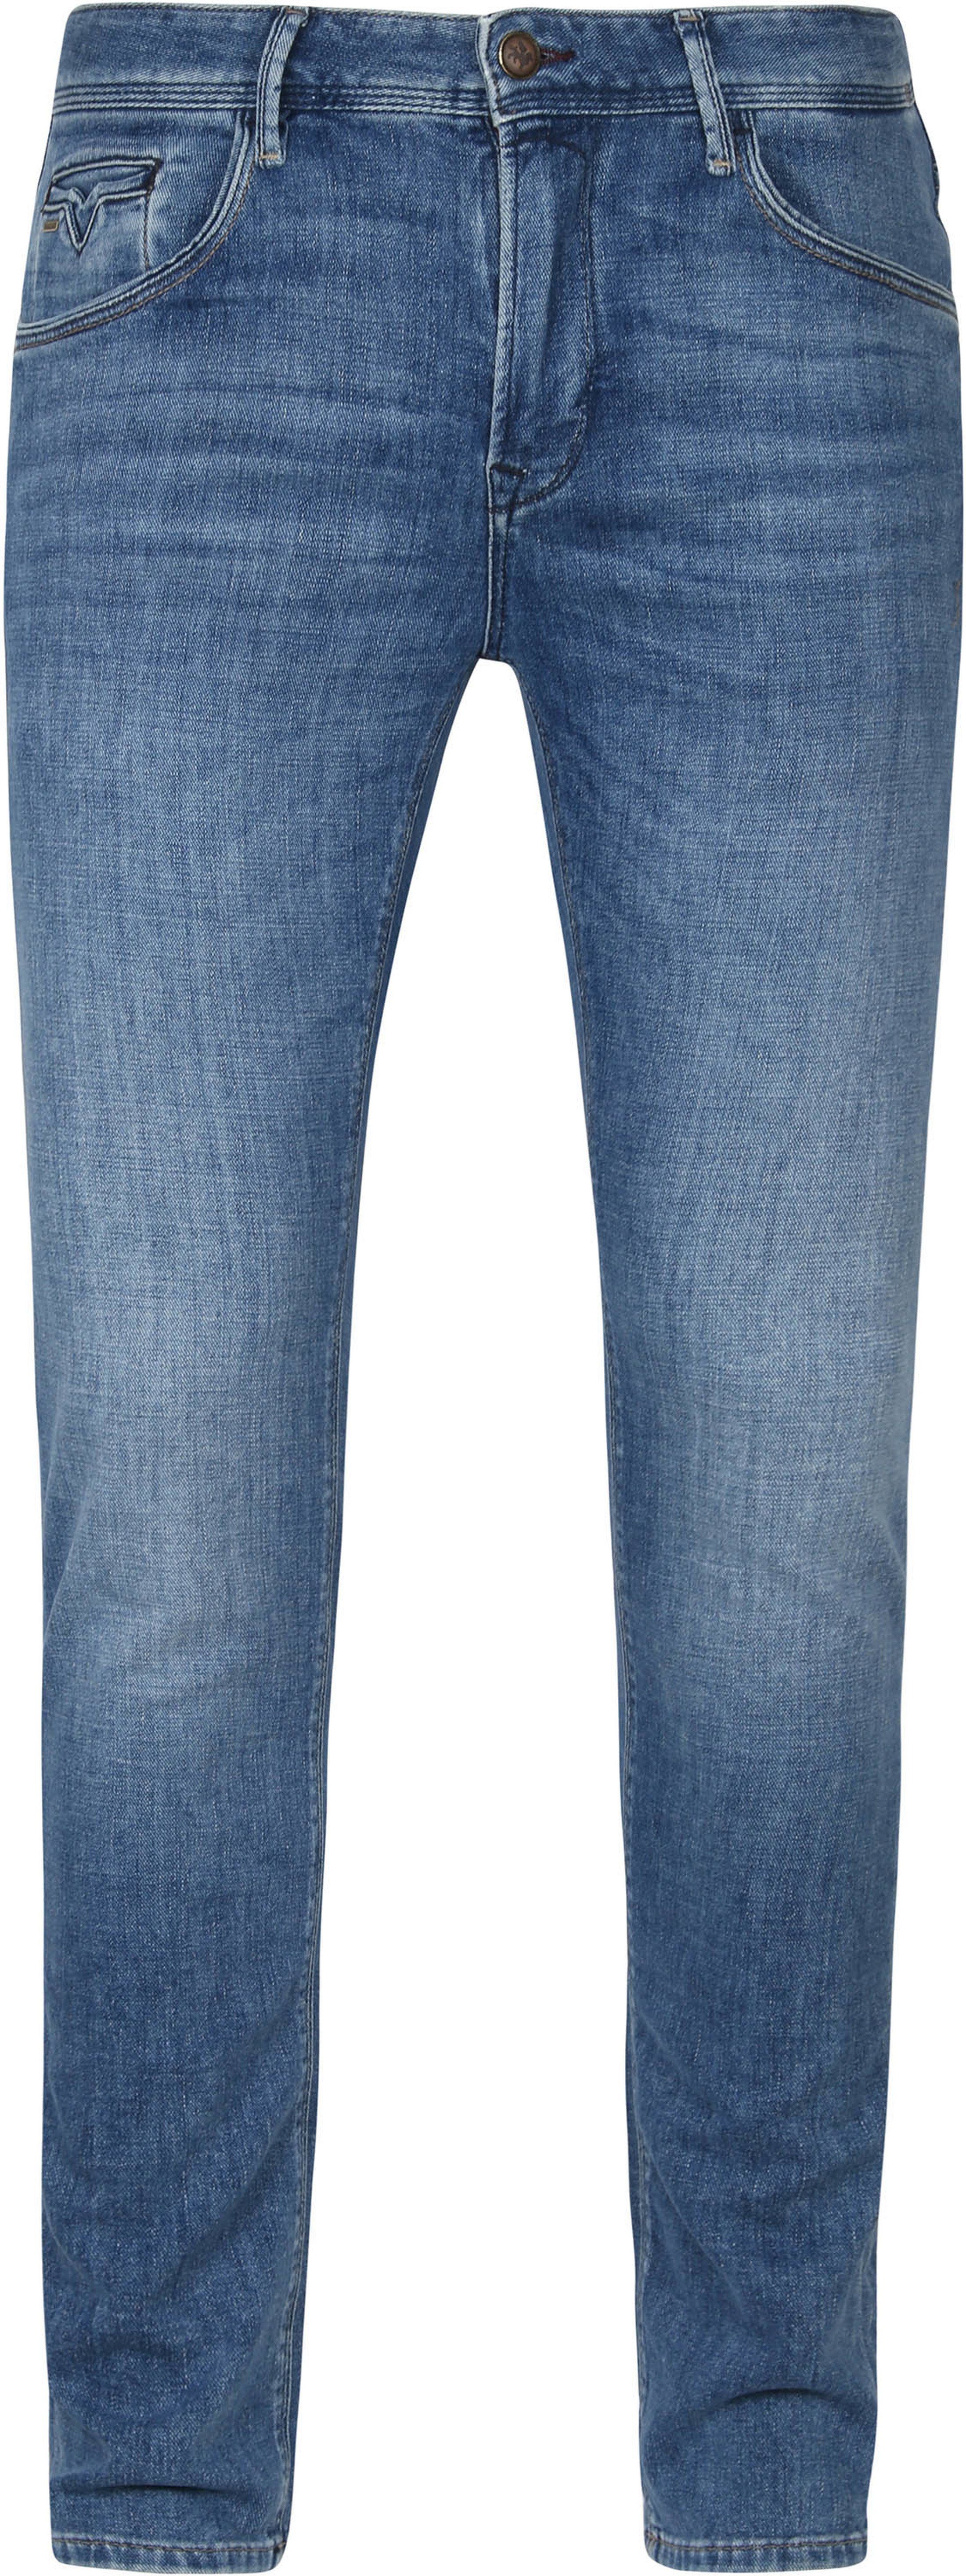 Vanguard V85 Scrambler Jeans SF Mid Wash Blue size W 31